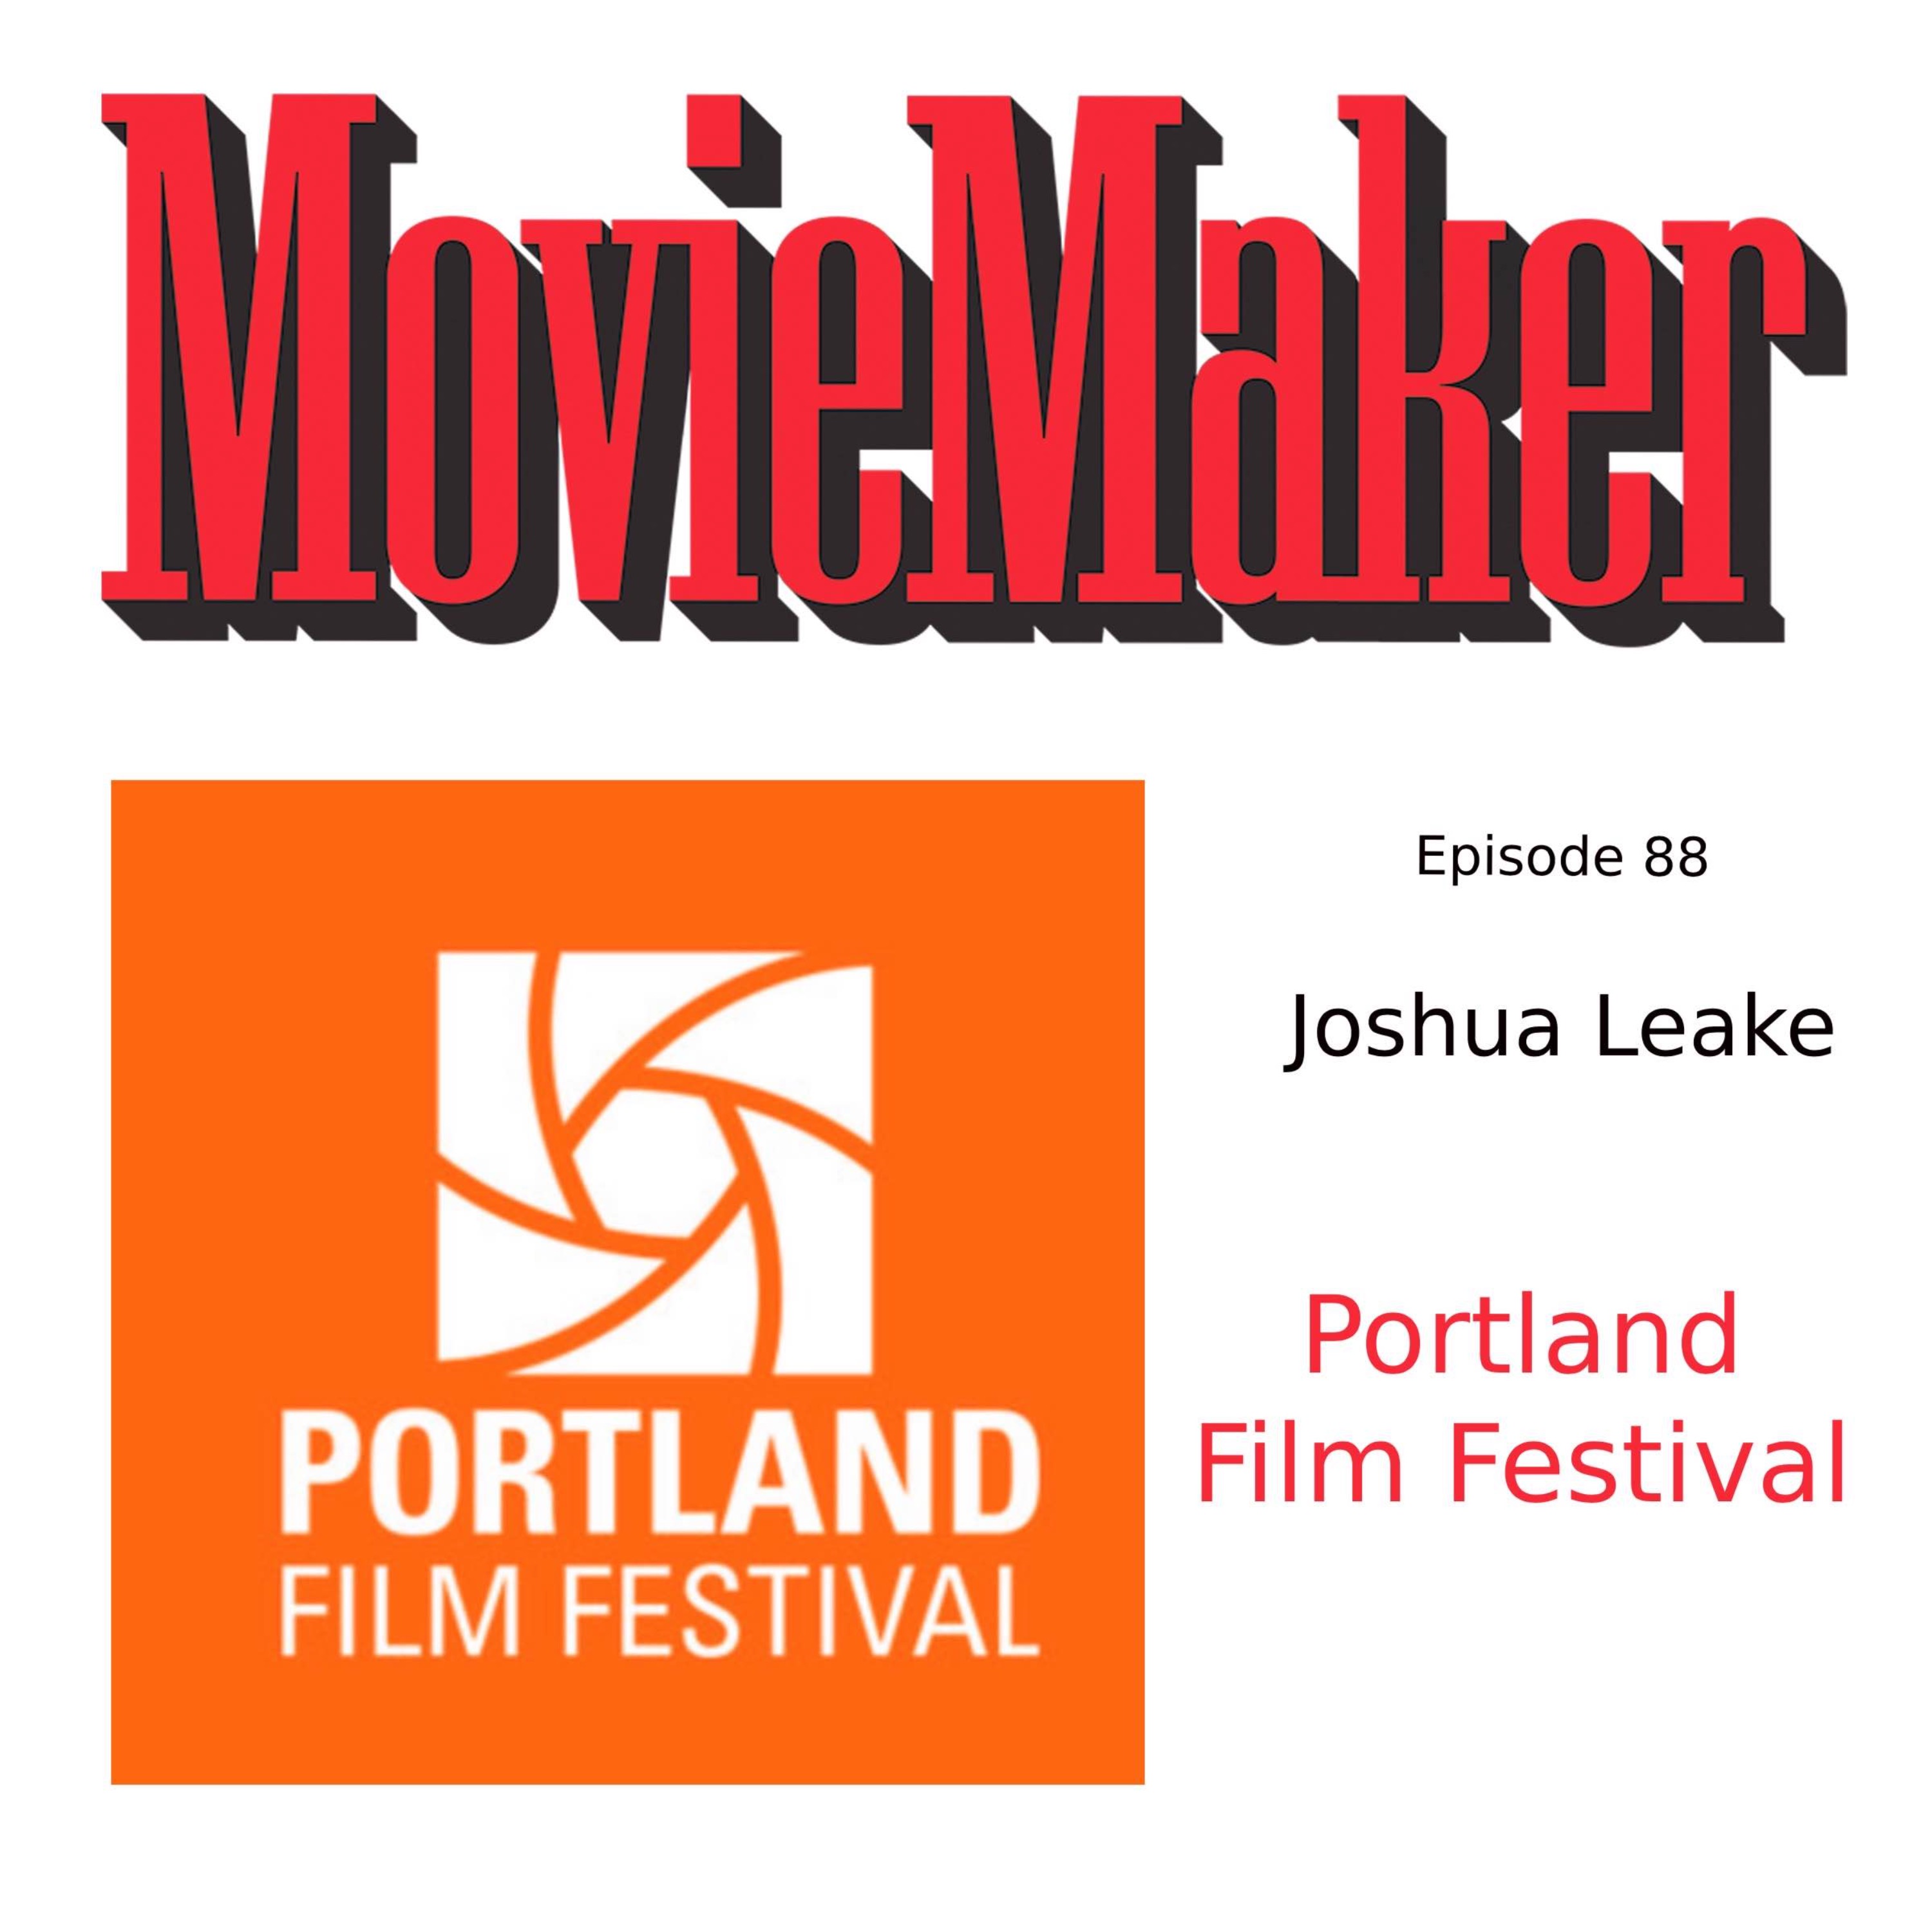 Joshua Leake (Portland Film Festival)